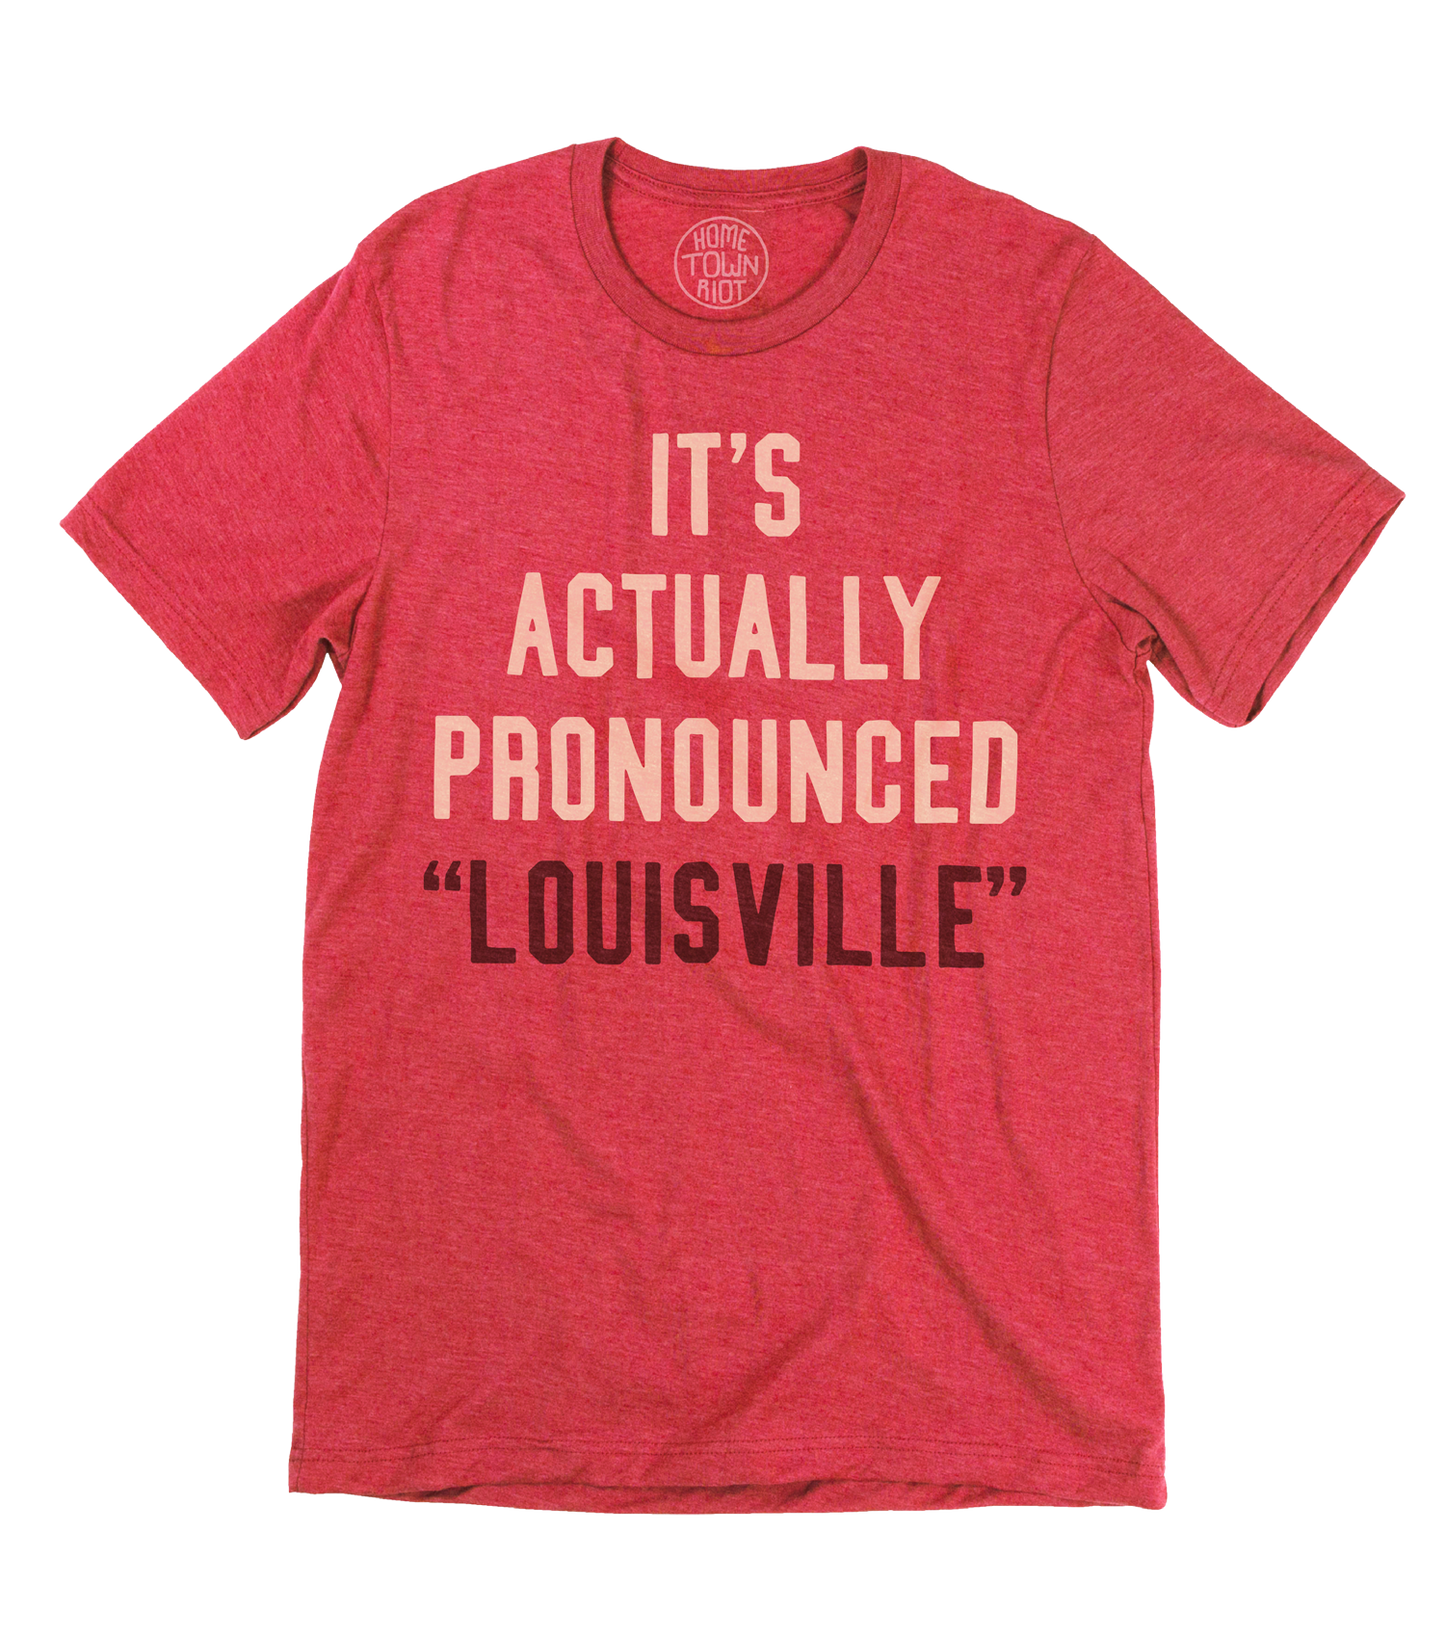 It's pronounced "Louisville" Shirt